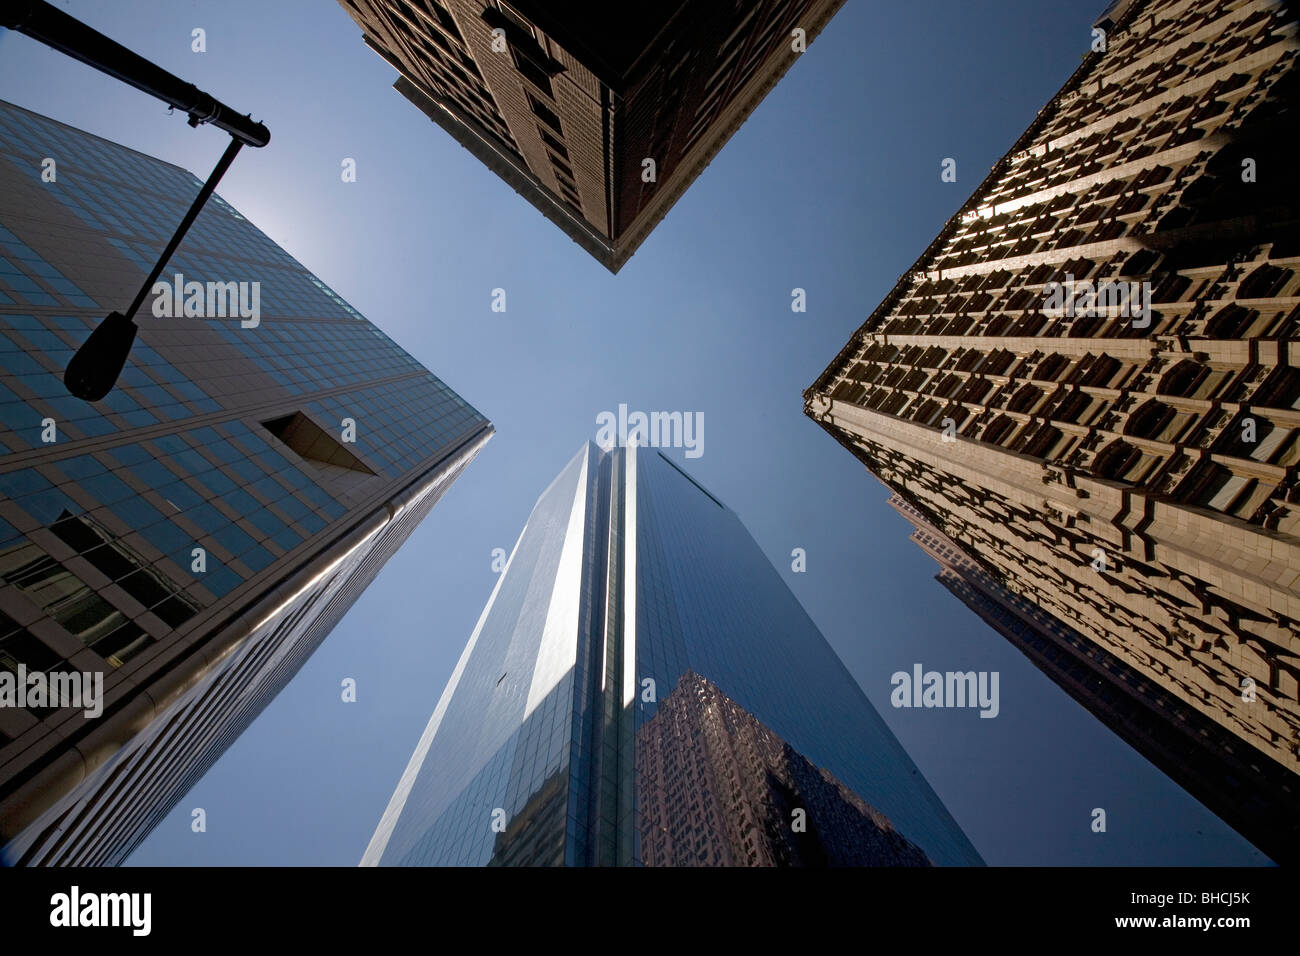 Comcast skyscraper in Philadelphia, Pennsylvania Stock Photo